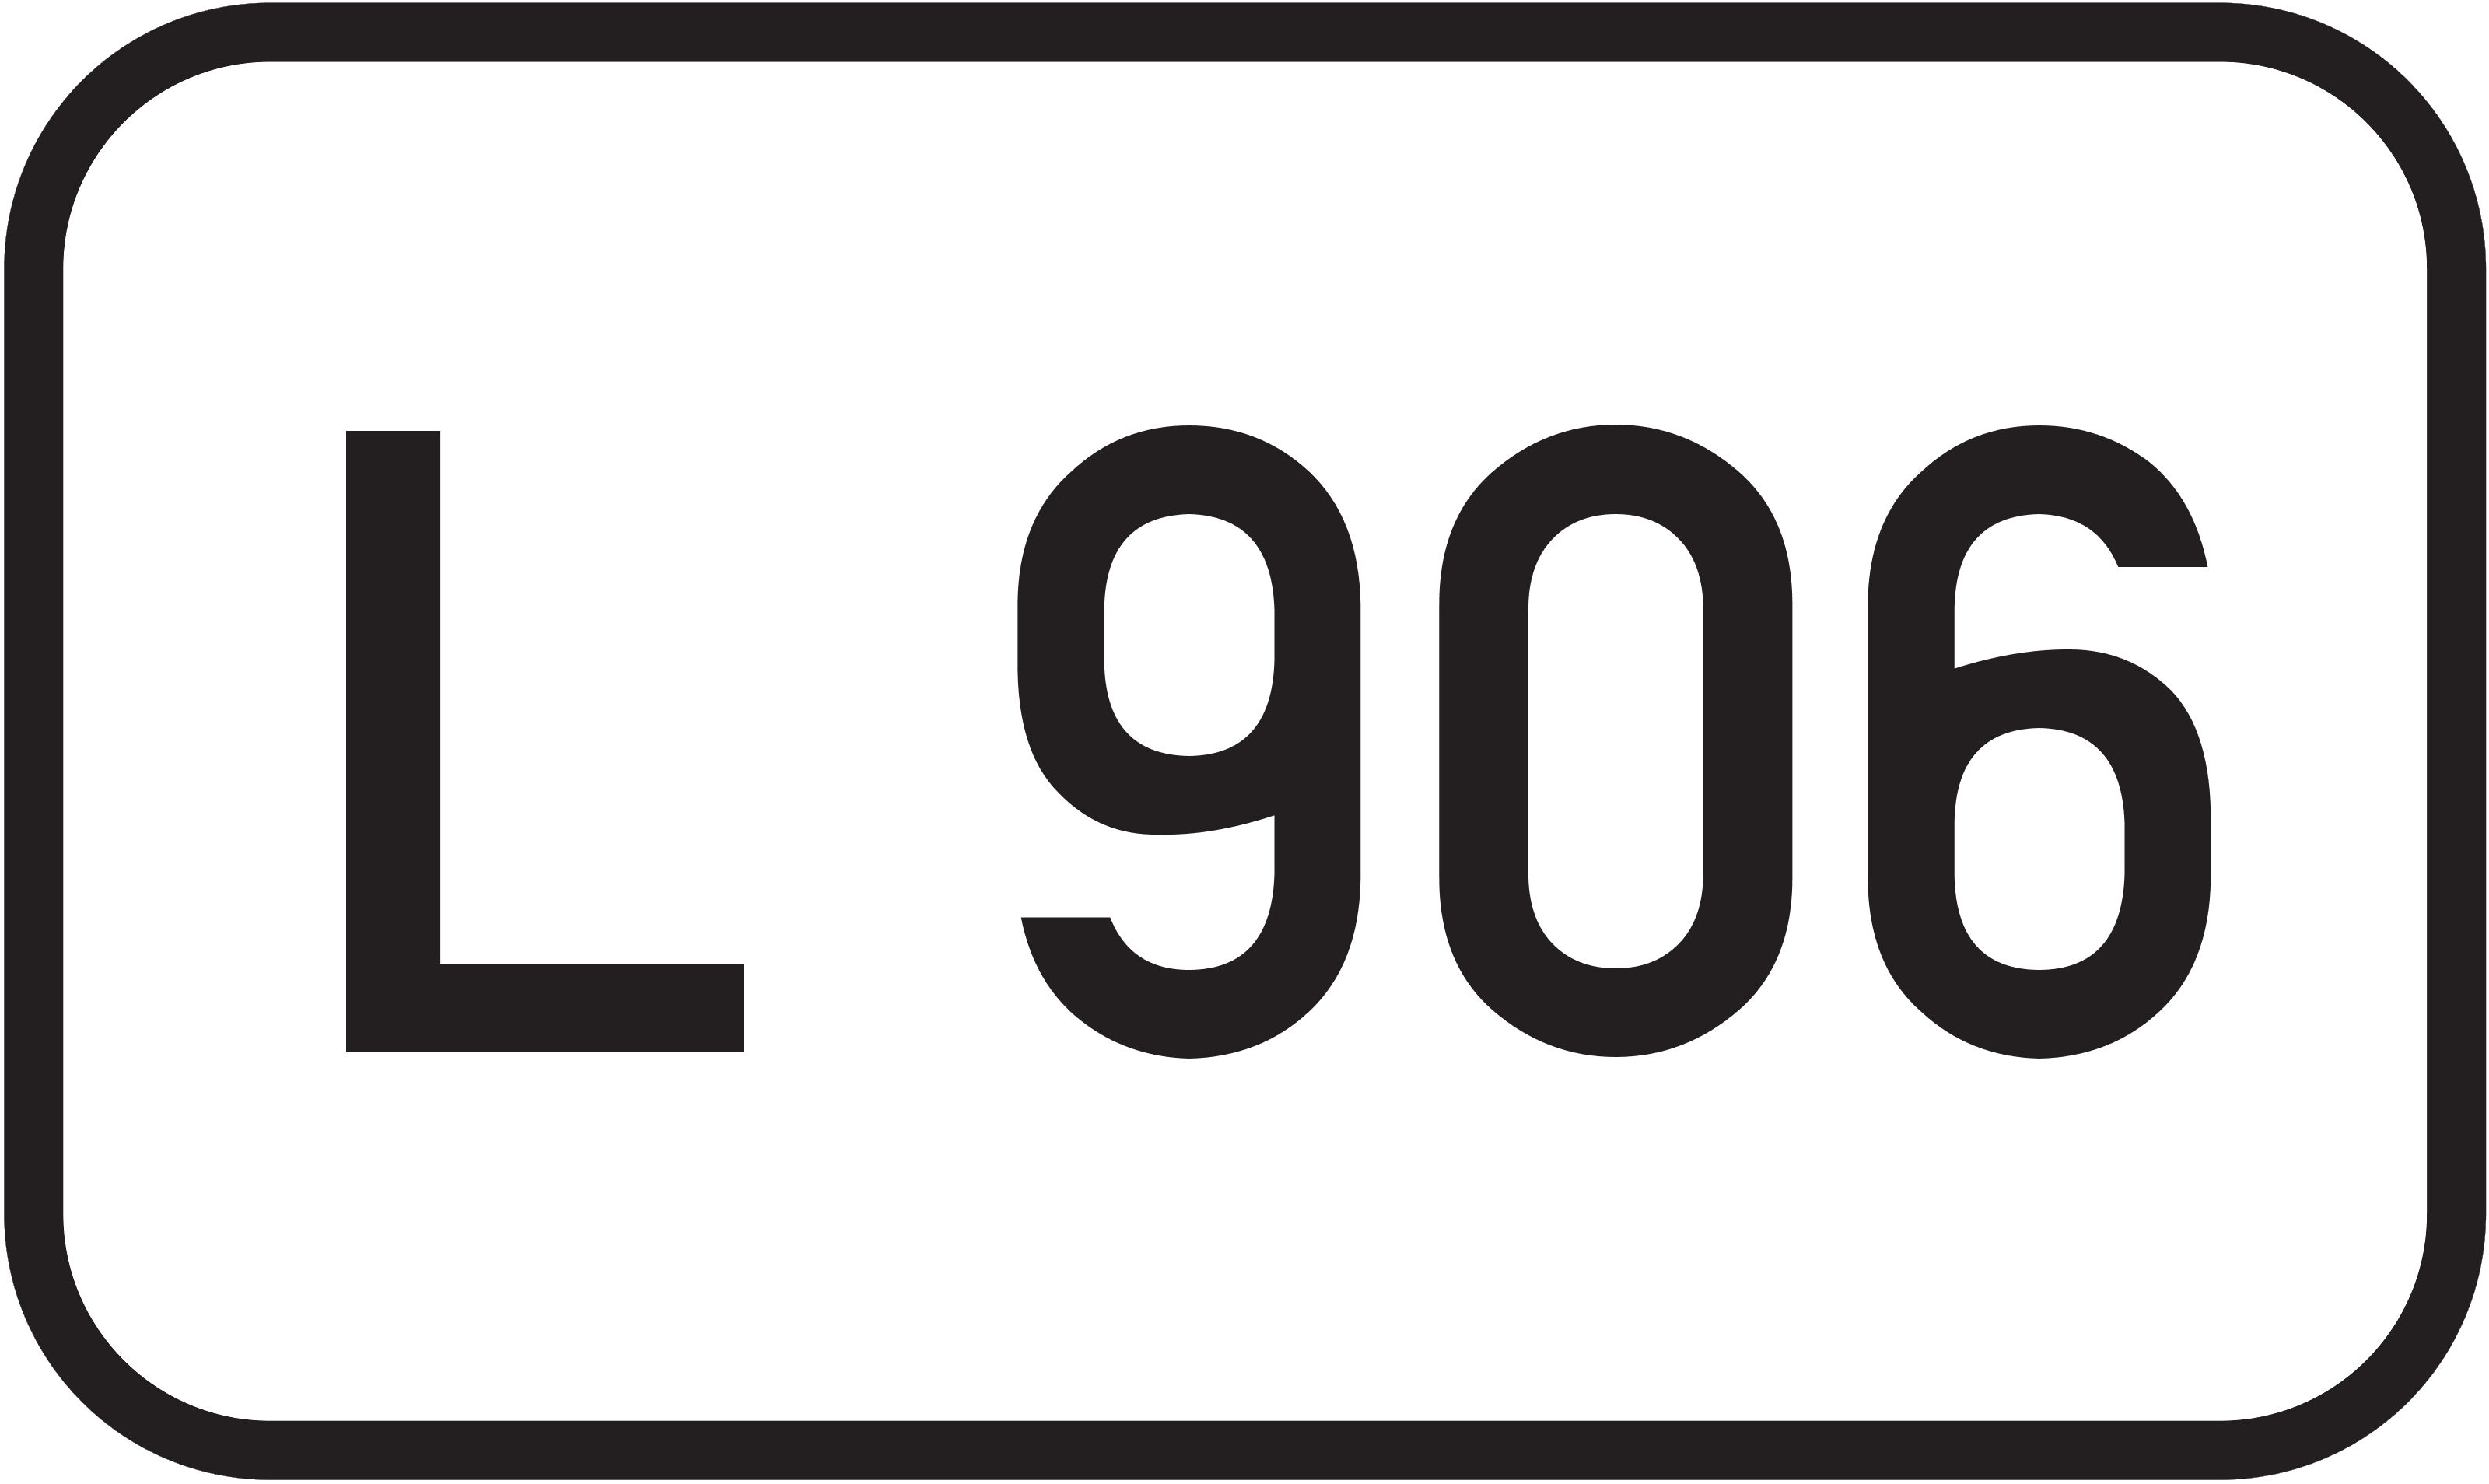 Straßenschild Landesstraße L 906